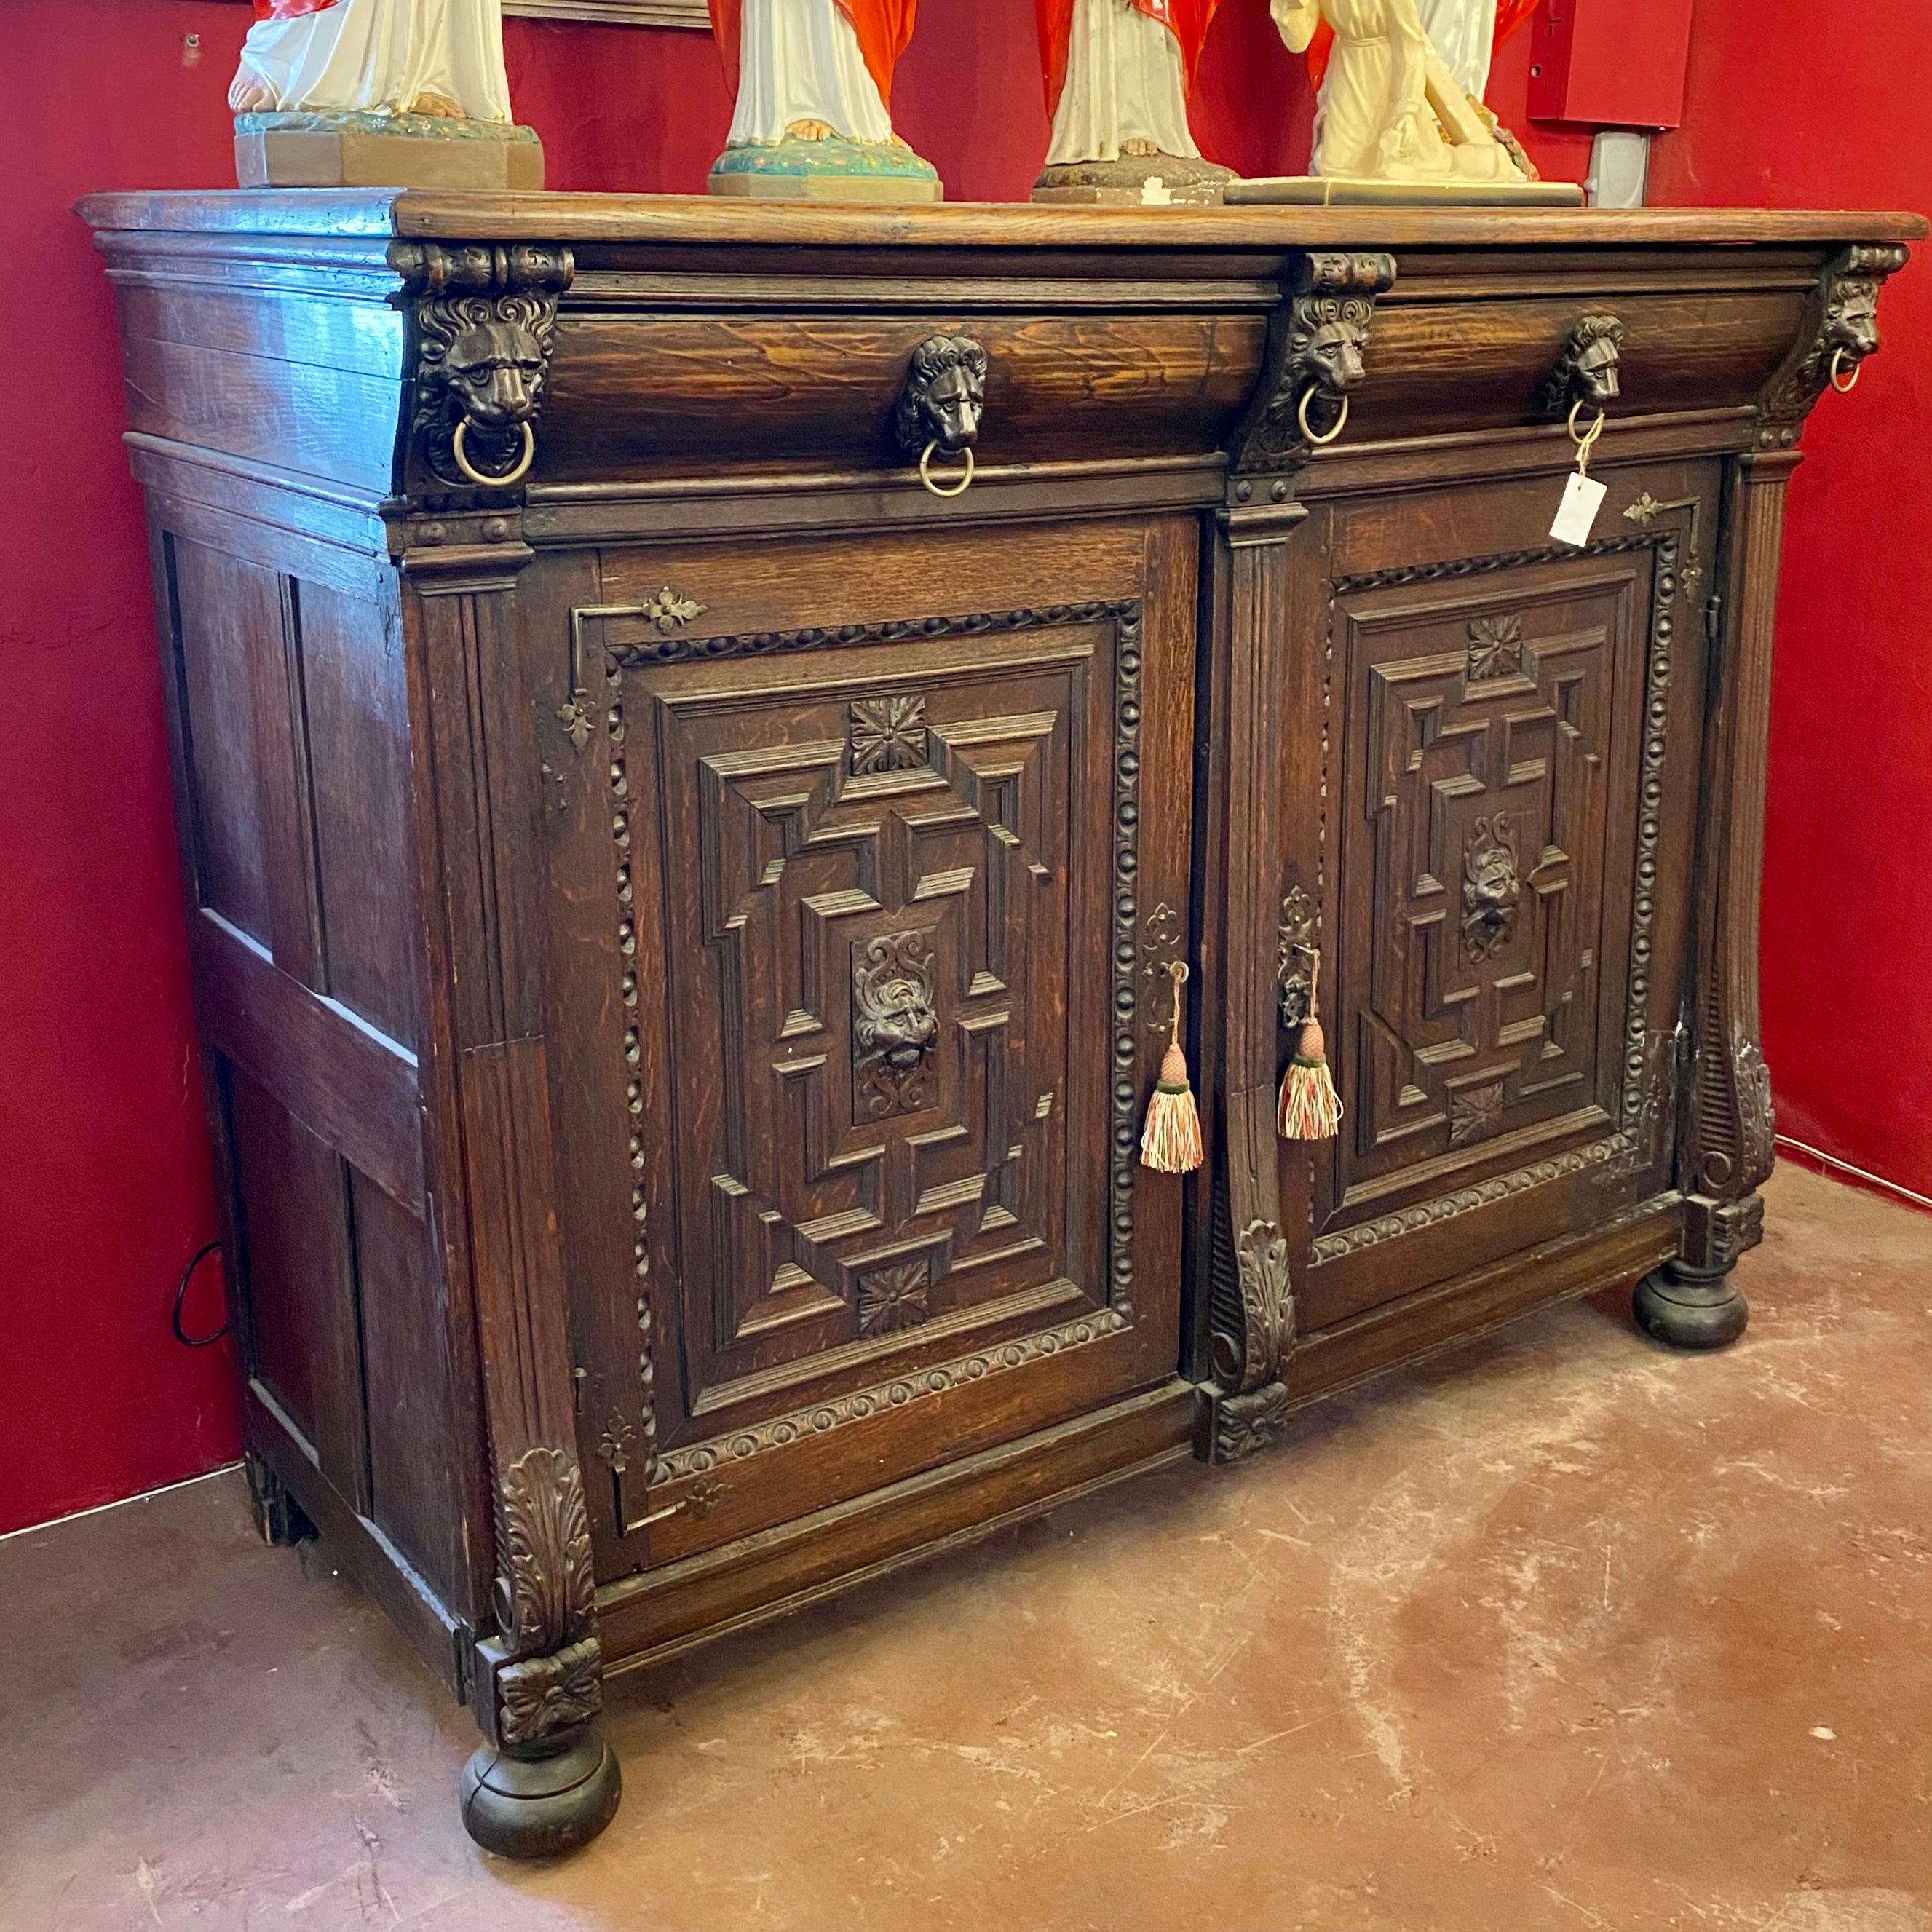 Antique French Oak Cabinet with Lion's Face Details